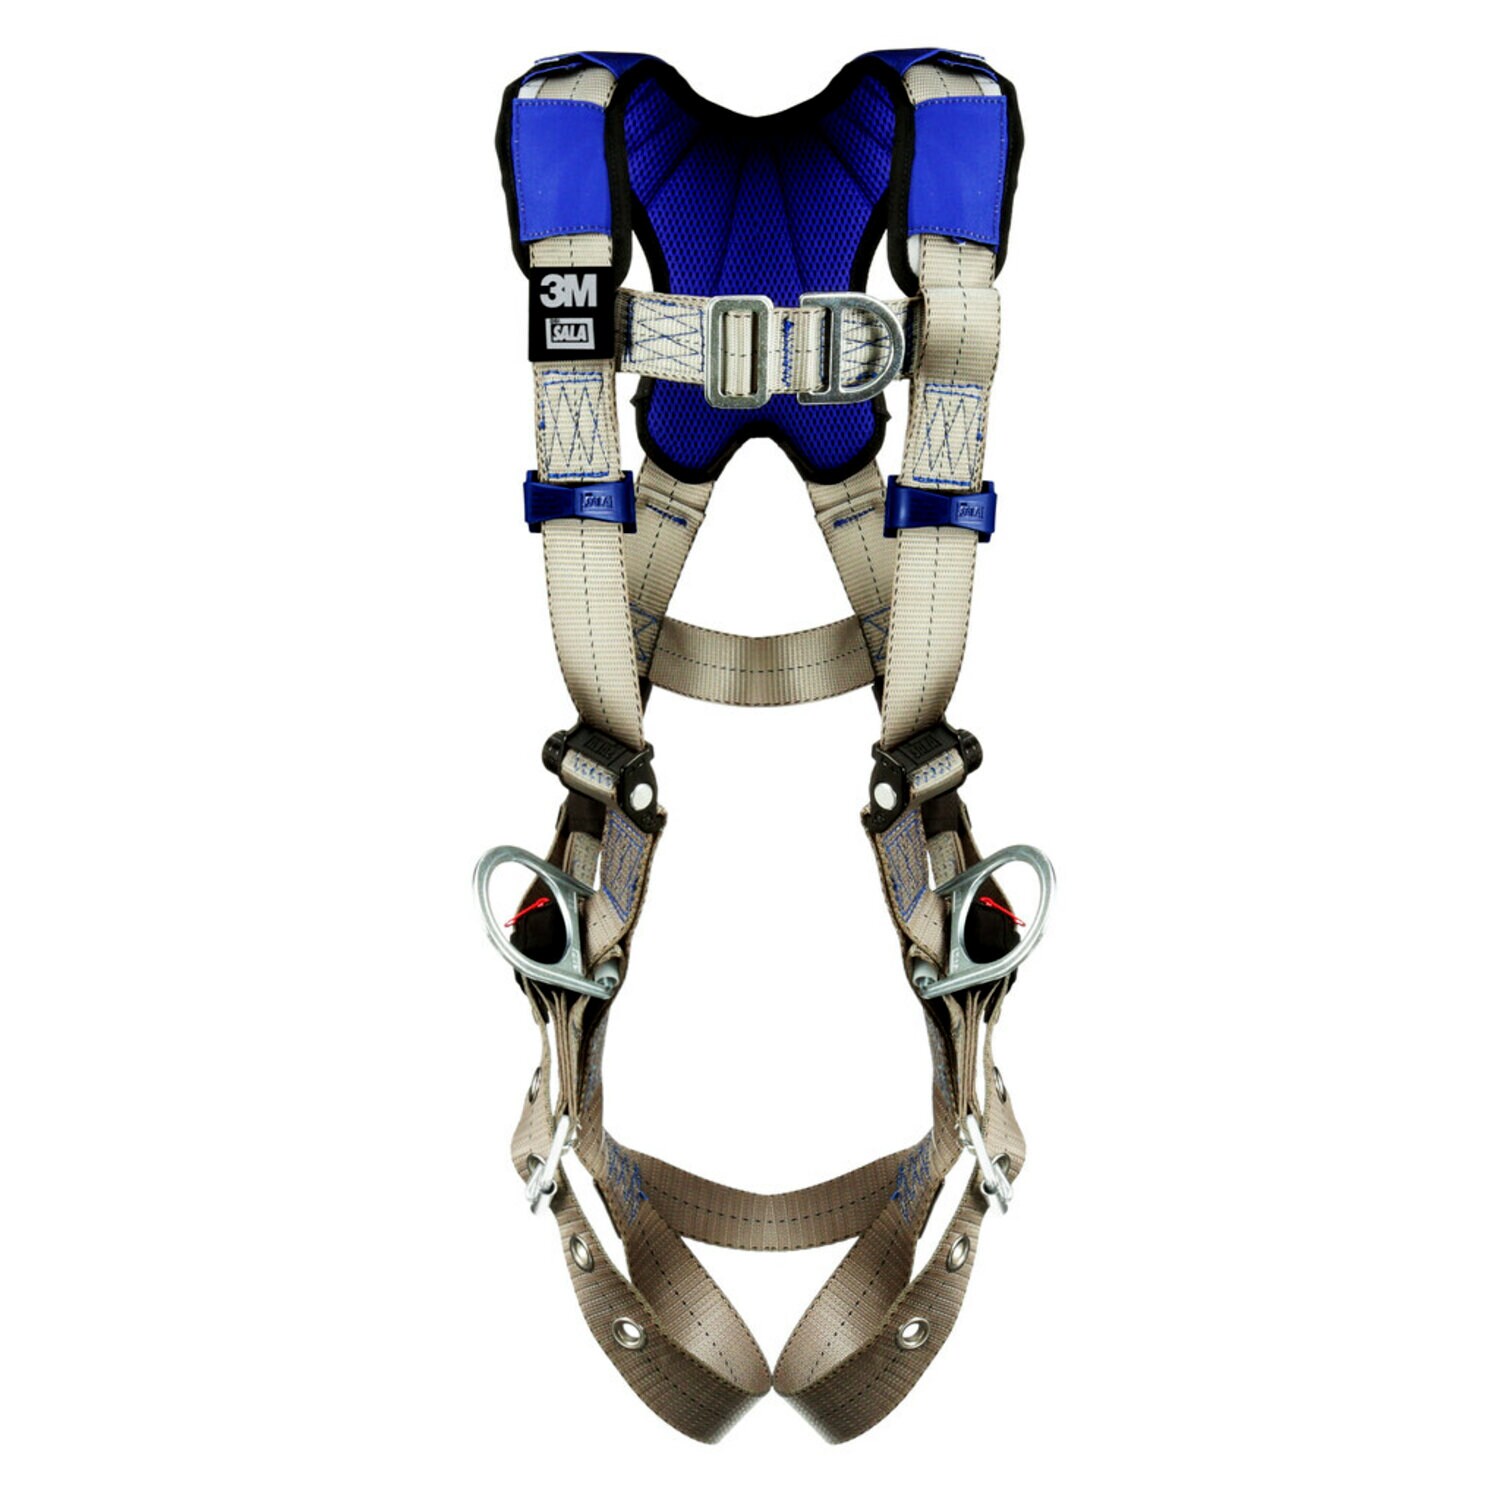 7012817659 - 3M DBI-SALA ExoFit X100 Comfort Vest Climbing/Positioning Safety Harness 1401173, Universal